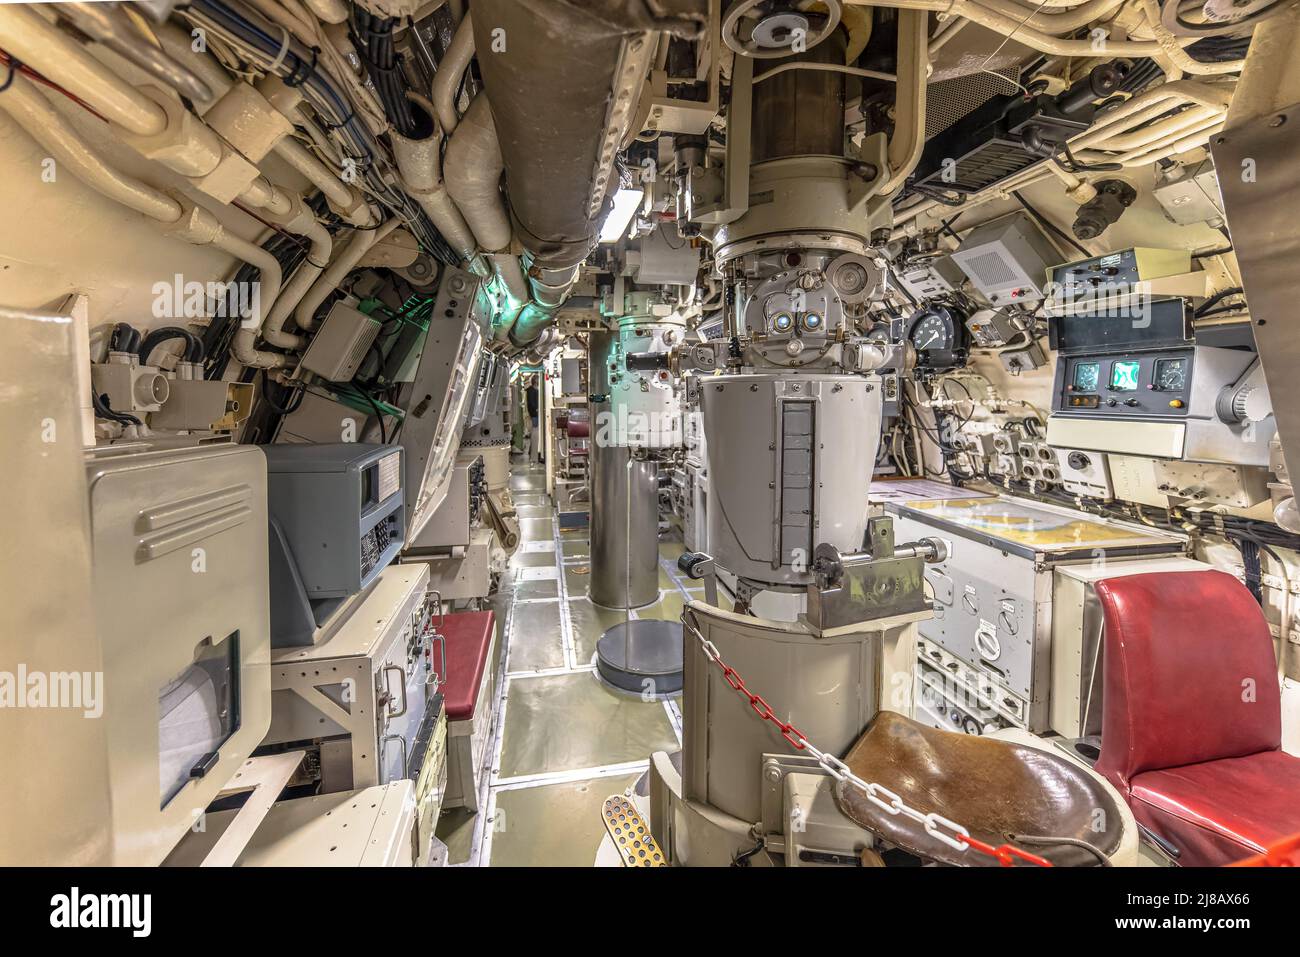 Interior of Submarine. Periscope and control room area. Stock Photo